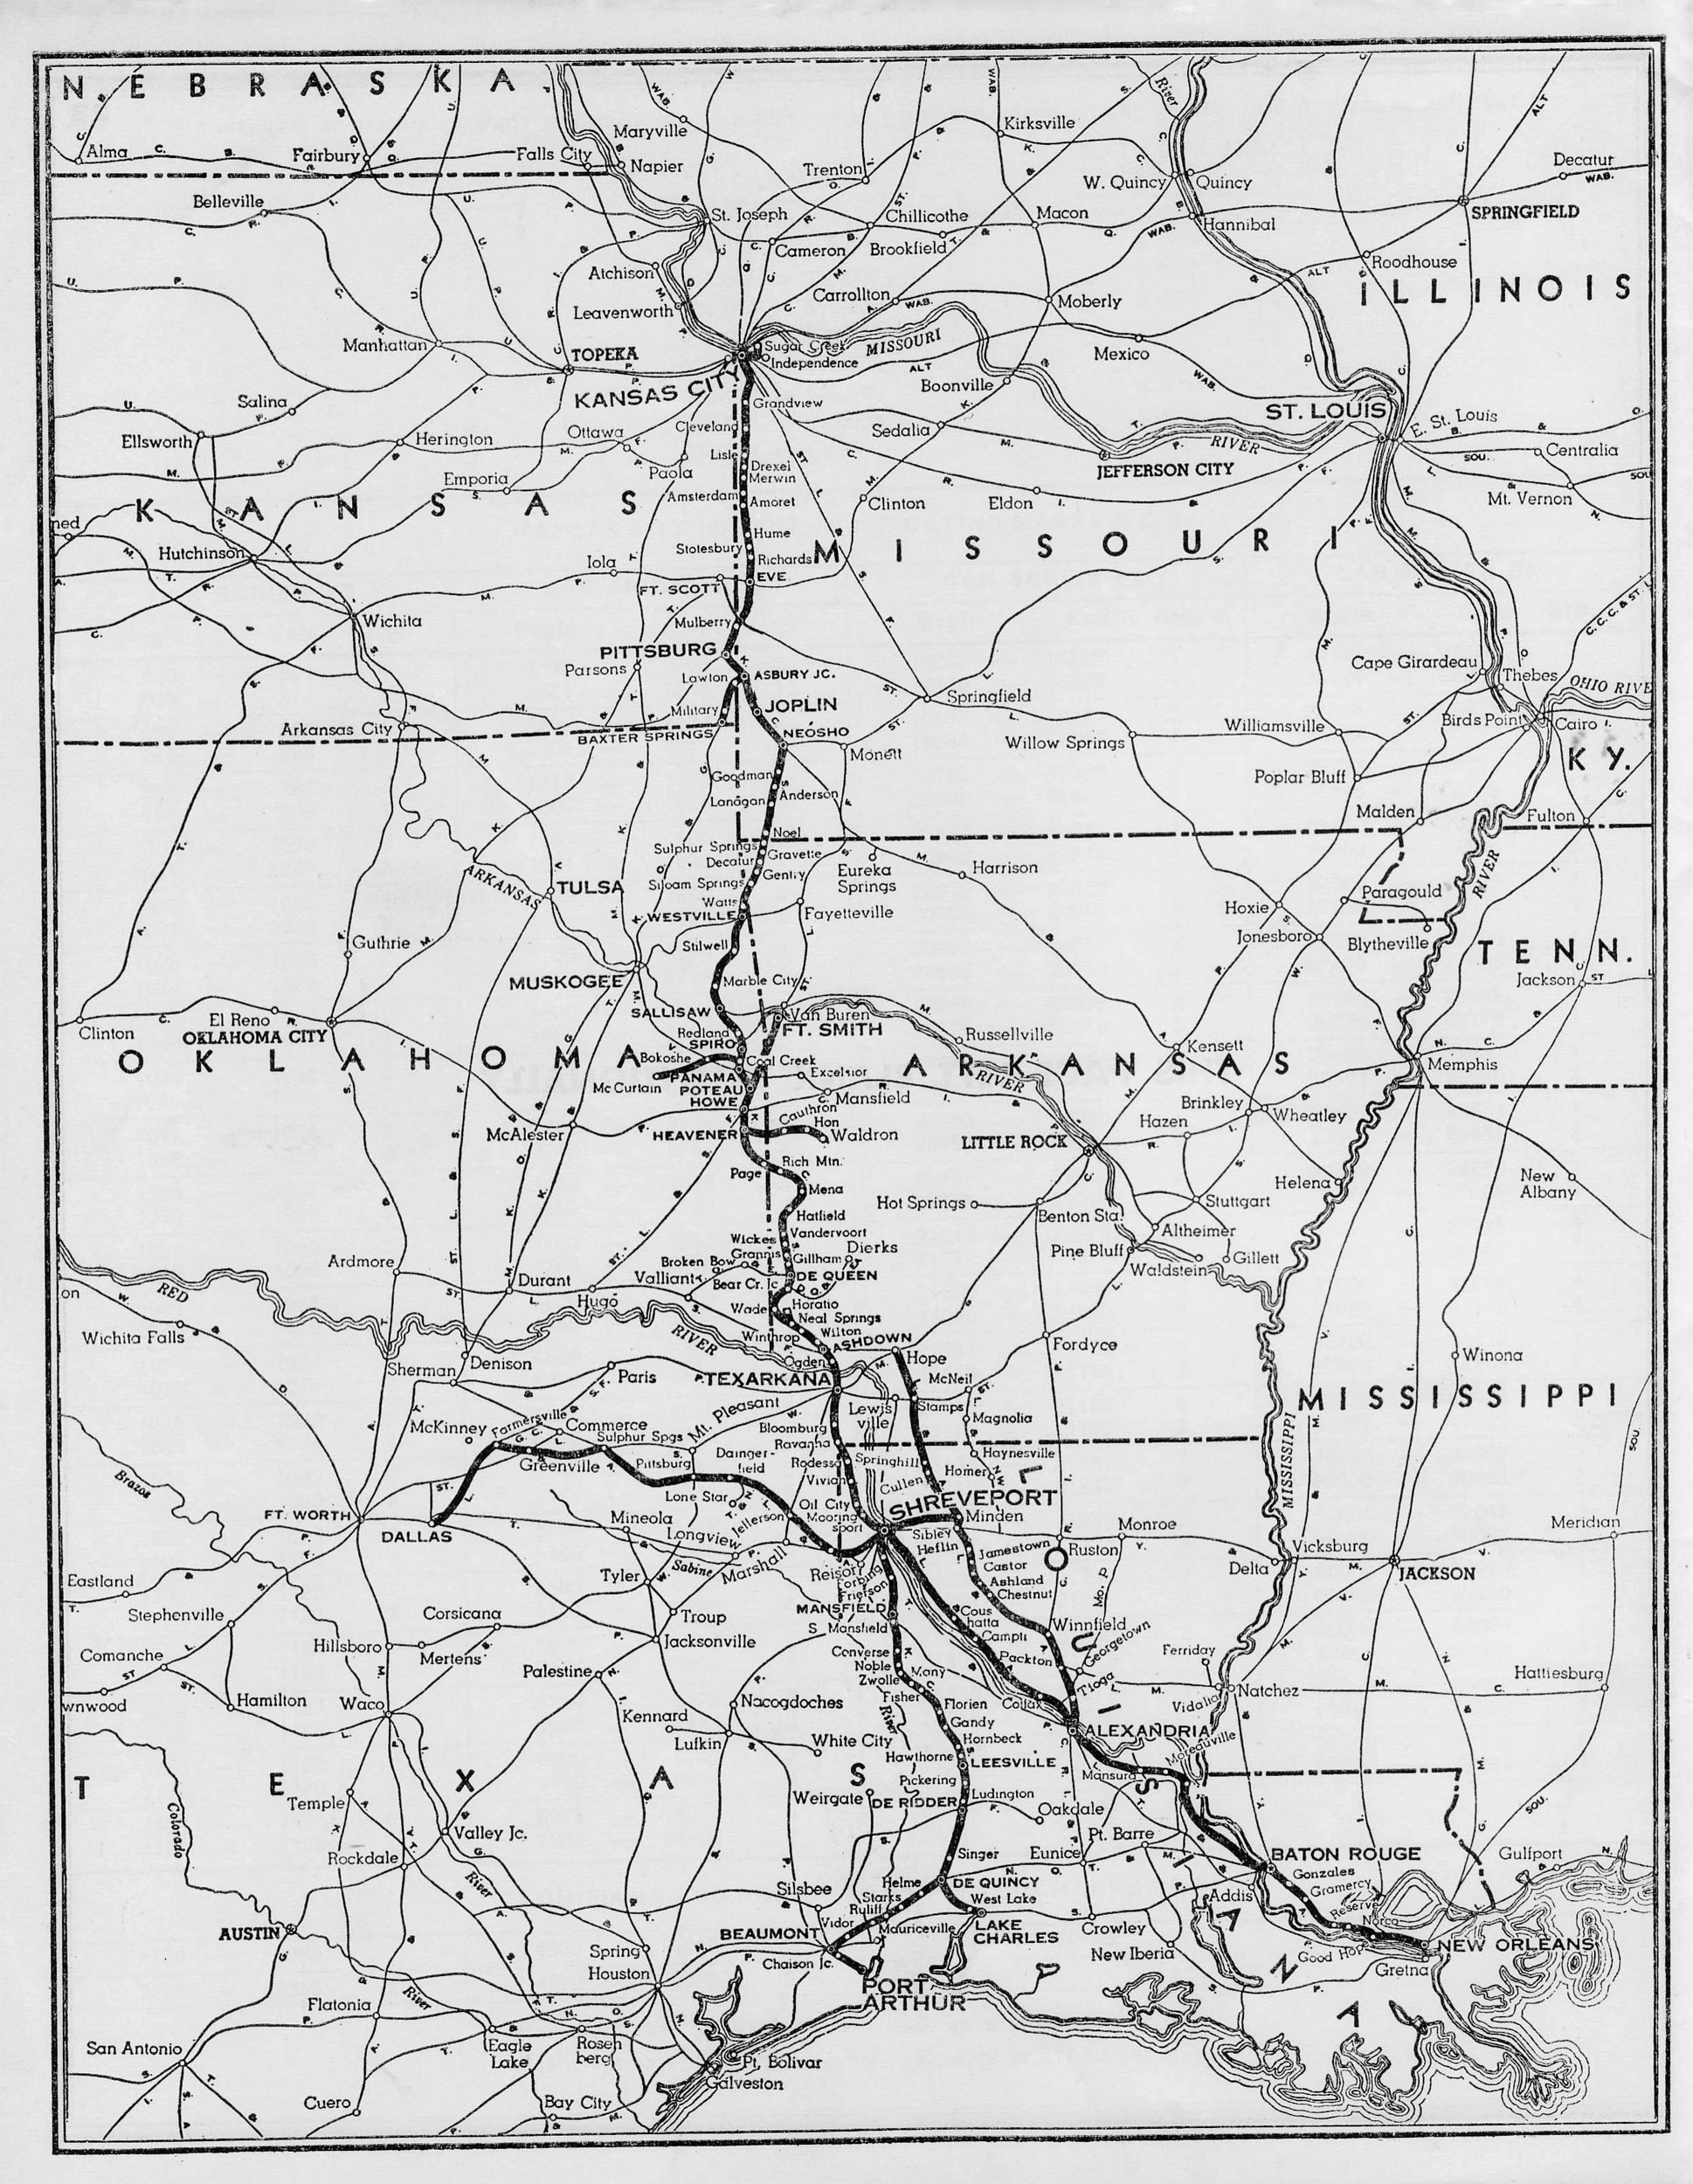 Transportation Company - Kansas City Southern - Railroad